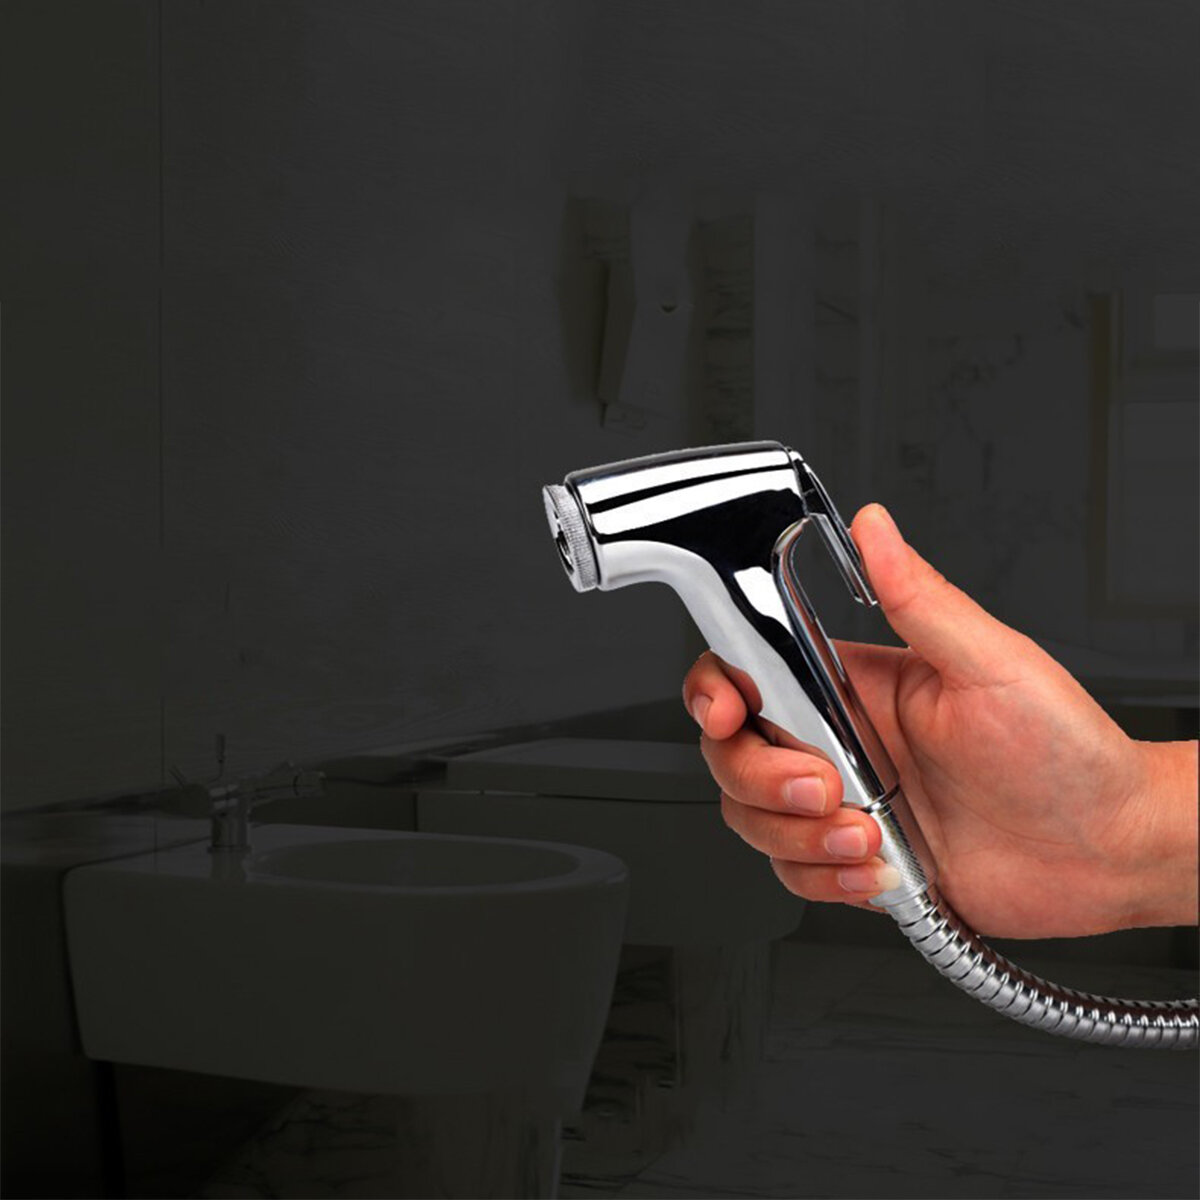 

ABS Bathroom Portable Bidet Sprayer Handhold Toilet Bidet Shower Head Sprayer for Personal Hygiene w